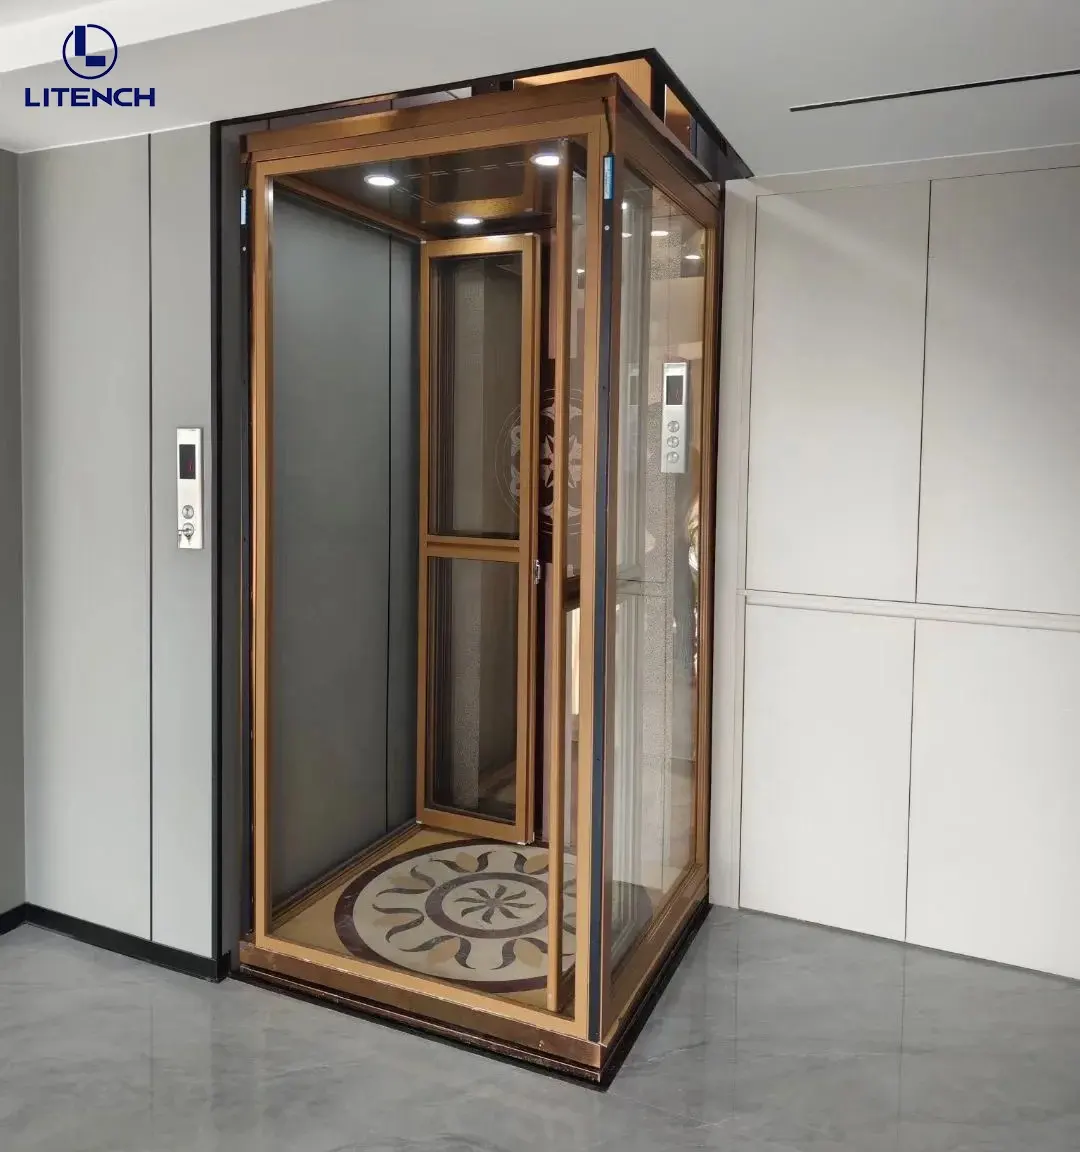 4 person commercial building elevator villa 2-4 floors real gold elevators lift for home